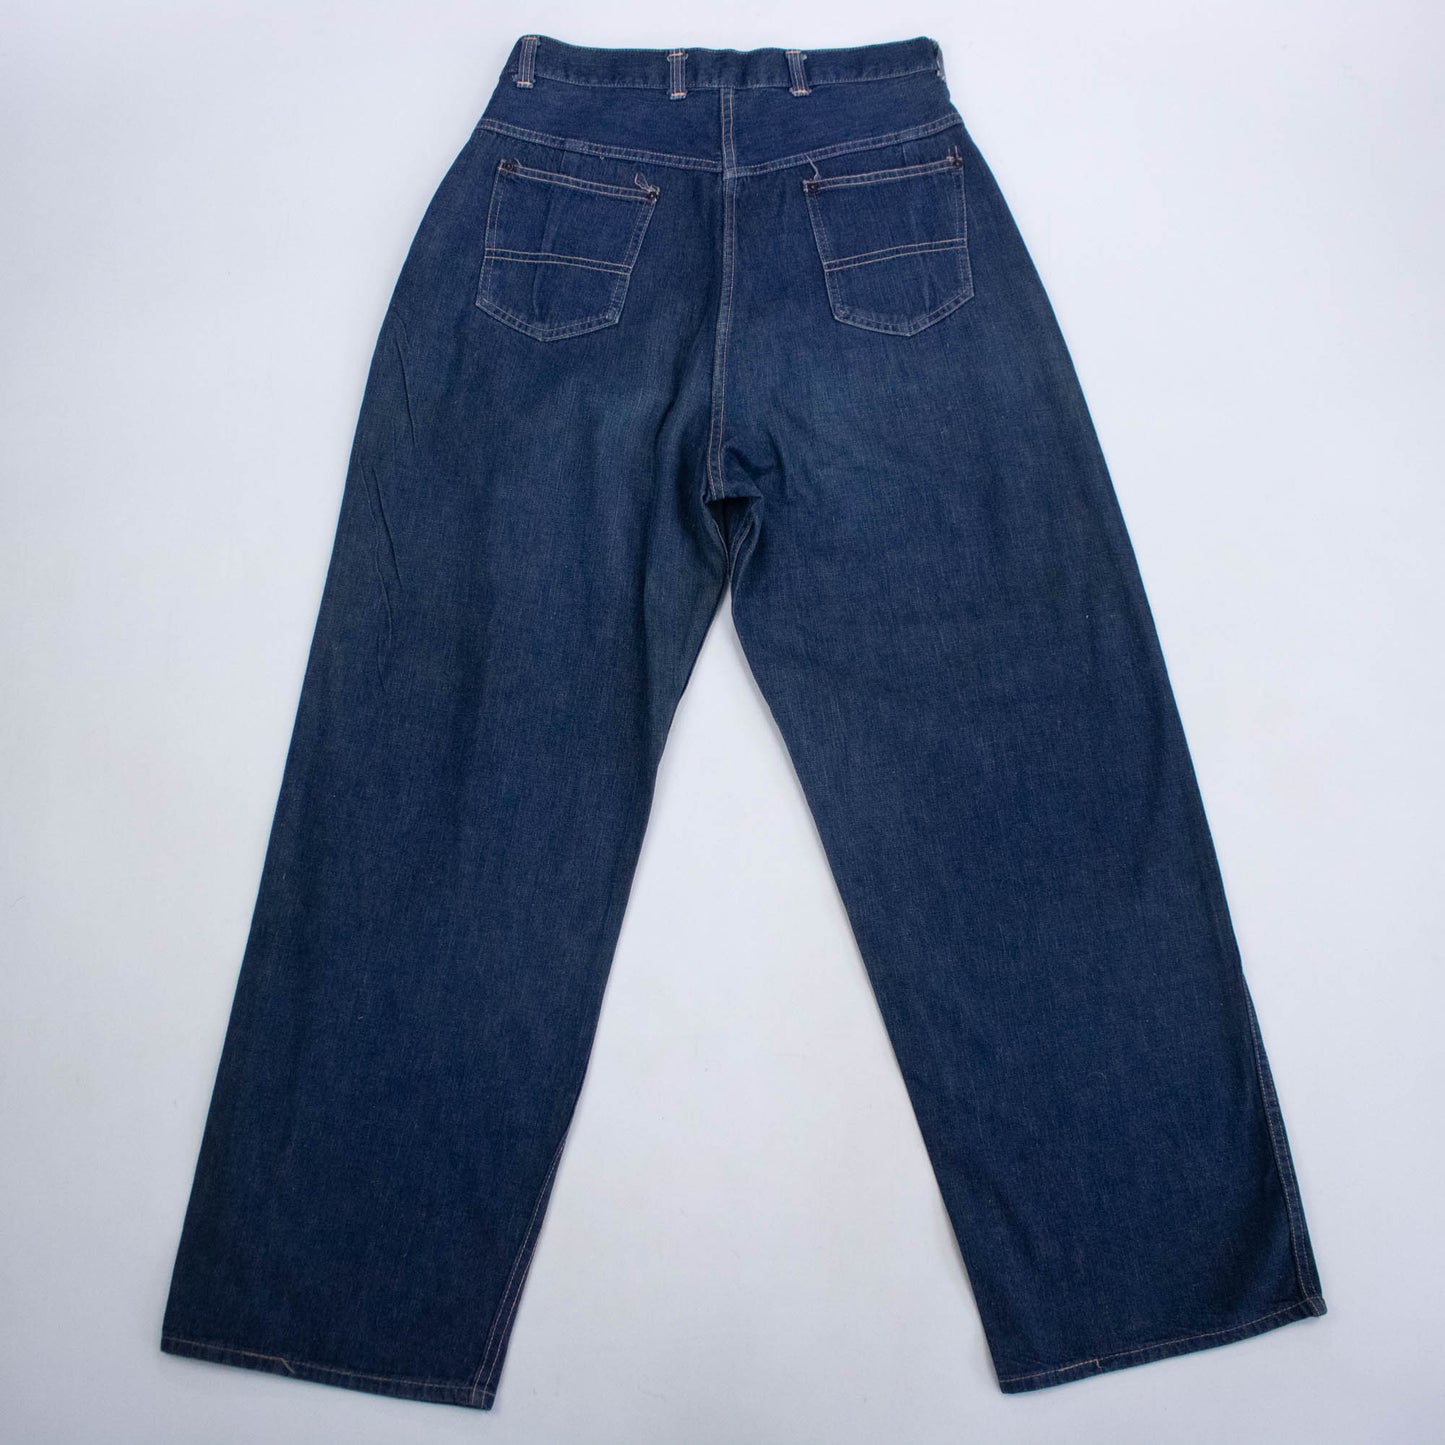 40s 50s Sz 29 Dark Side Zip Jeans